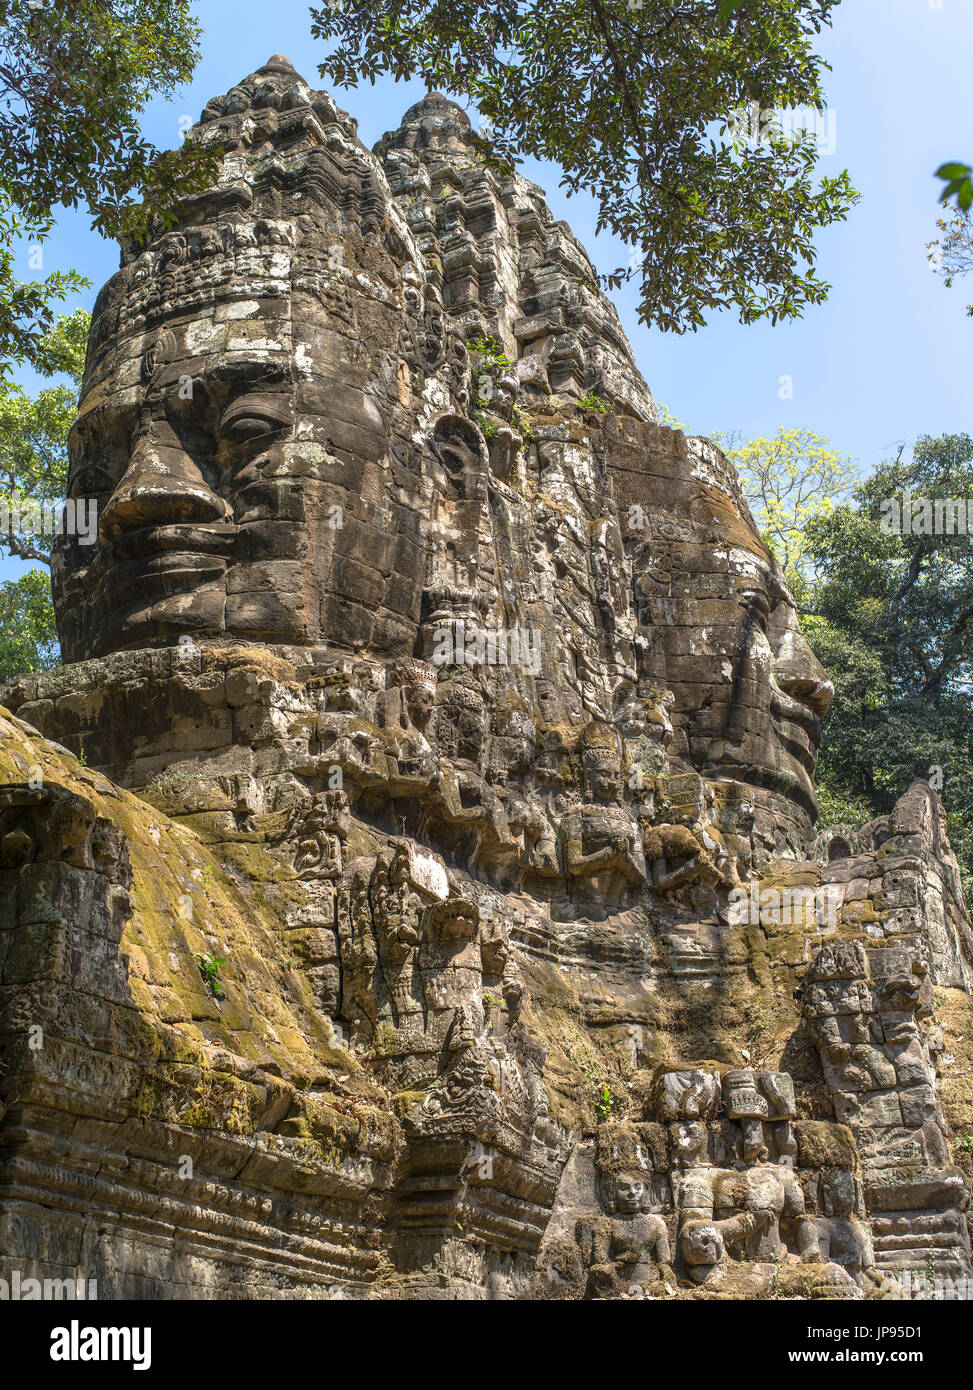 Porta nord di Angkor Thom, Parco Archeologico di Angkor, Foto Stock